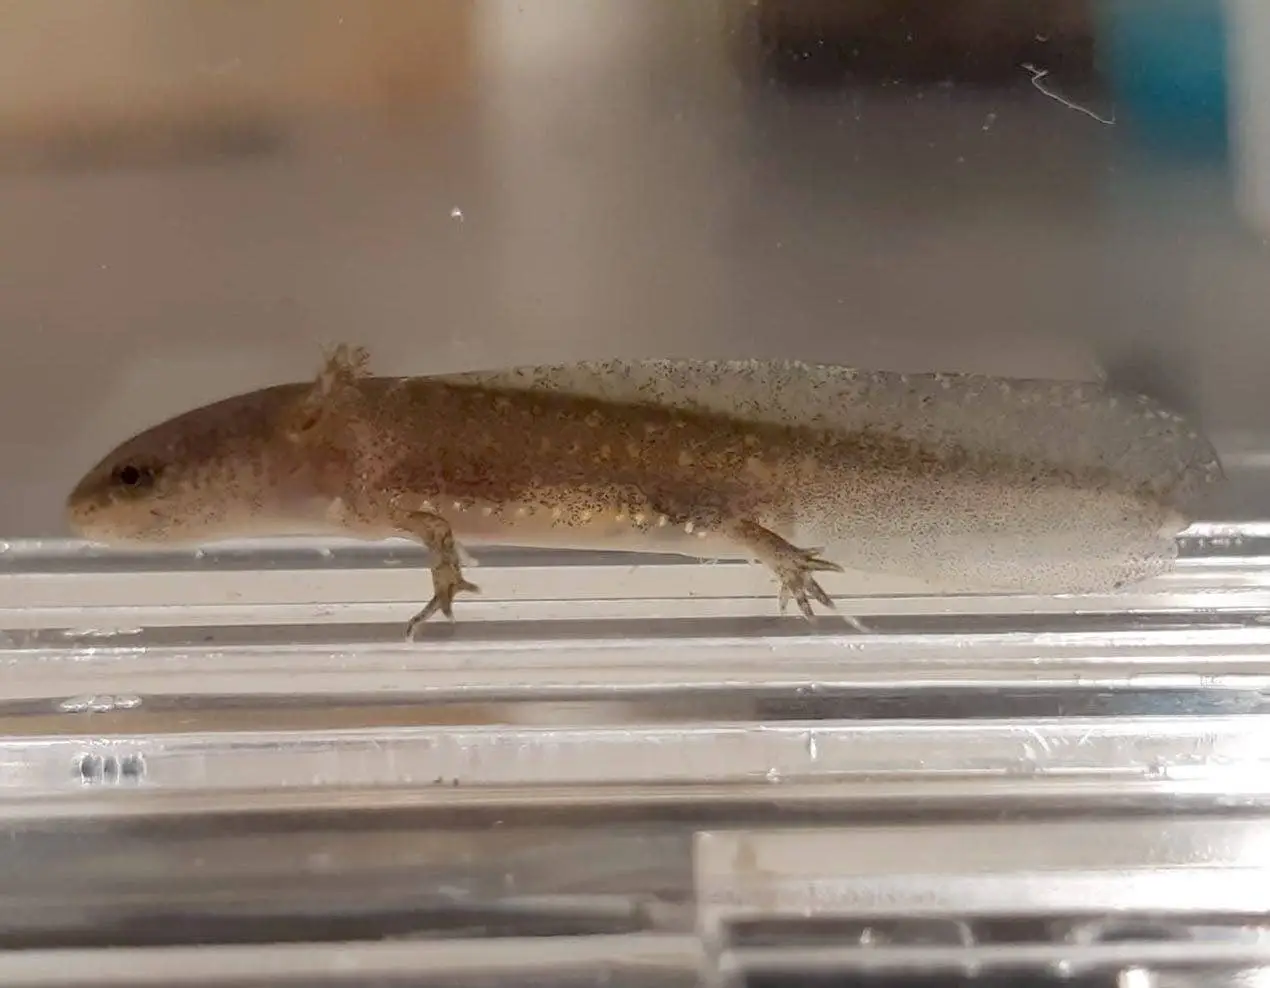 A larval salamander underwater in a tank